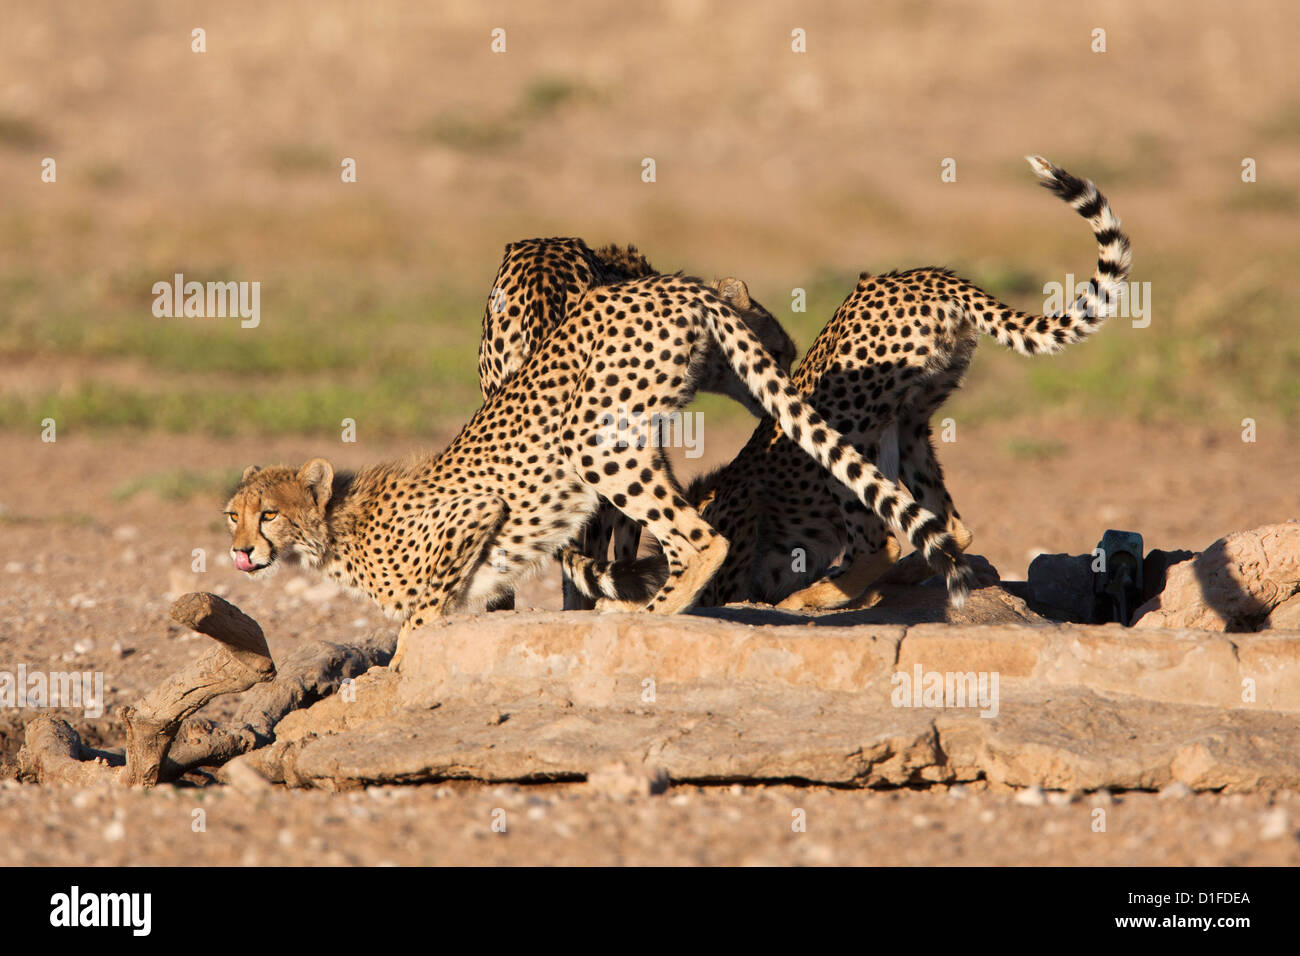 Cheetah (Acinonyx jubatus), Kgalagadi Transfrontier Park waterhole, South Africa, Africa Stock Photo